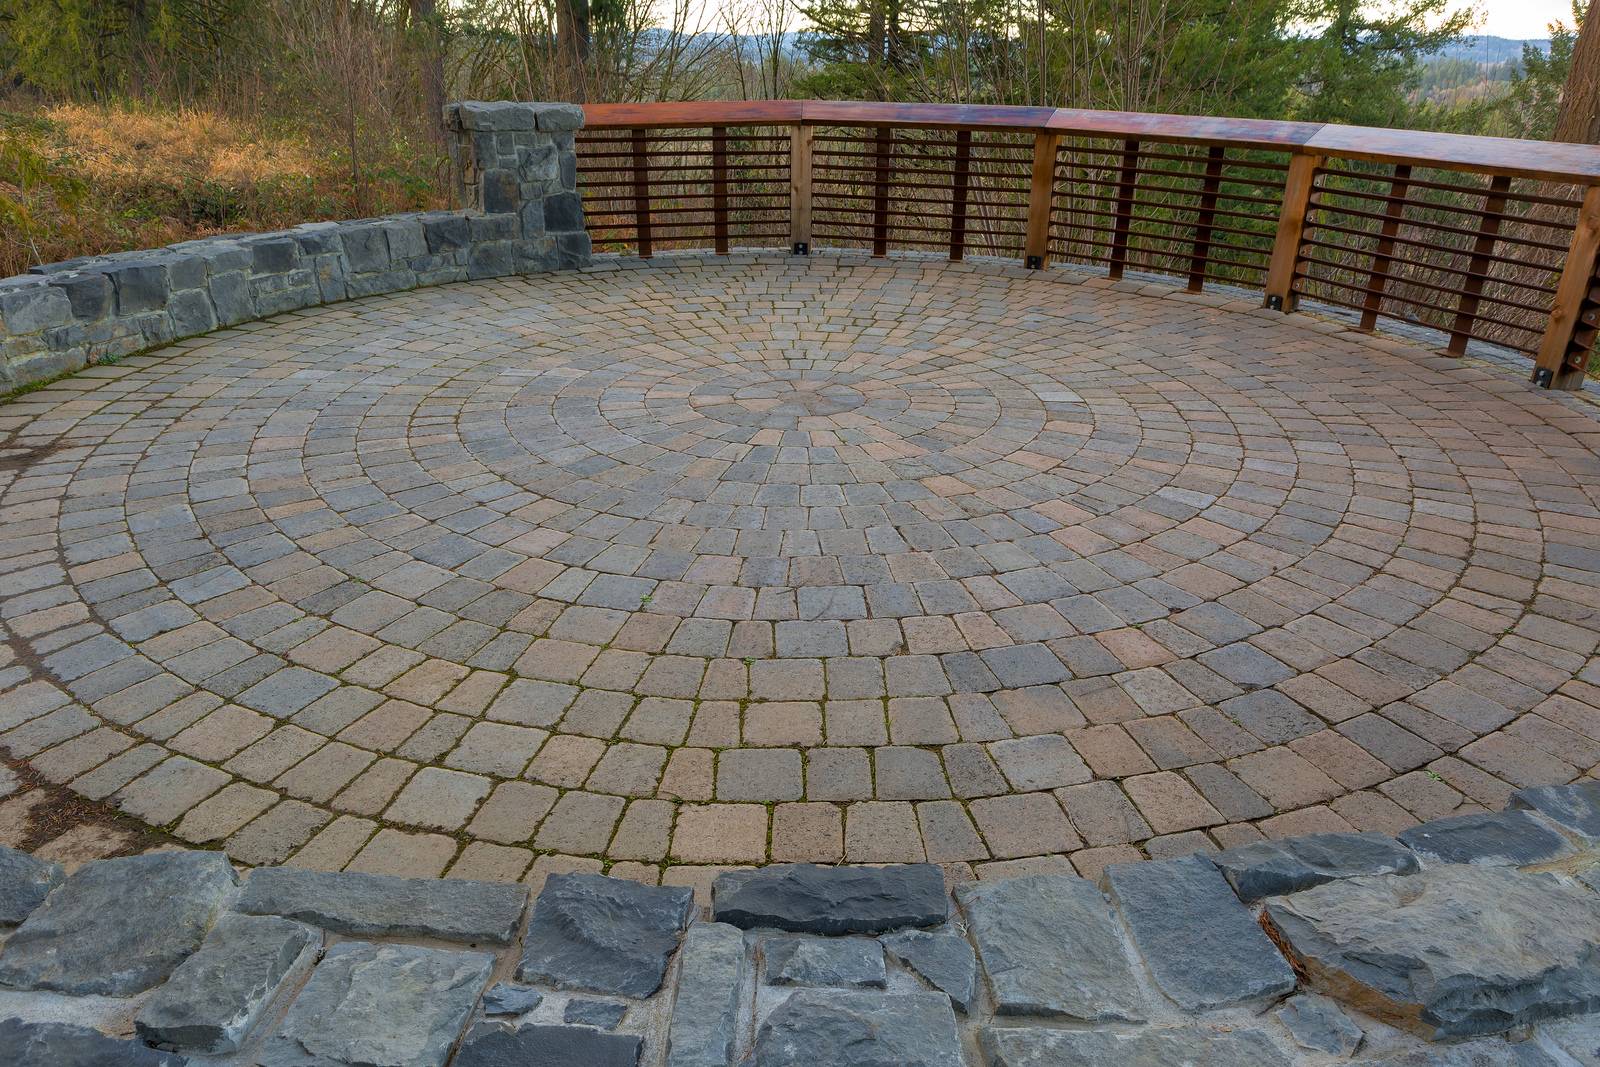 Garden Backyard circular brick stone pavers hardscape patio with wood railings stone wall landscaping